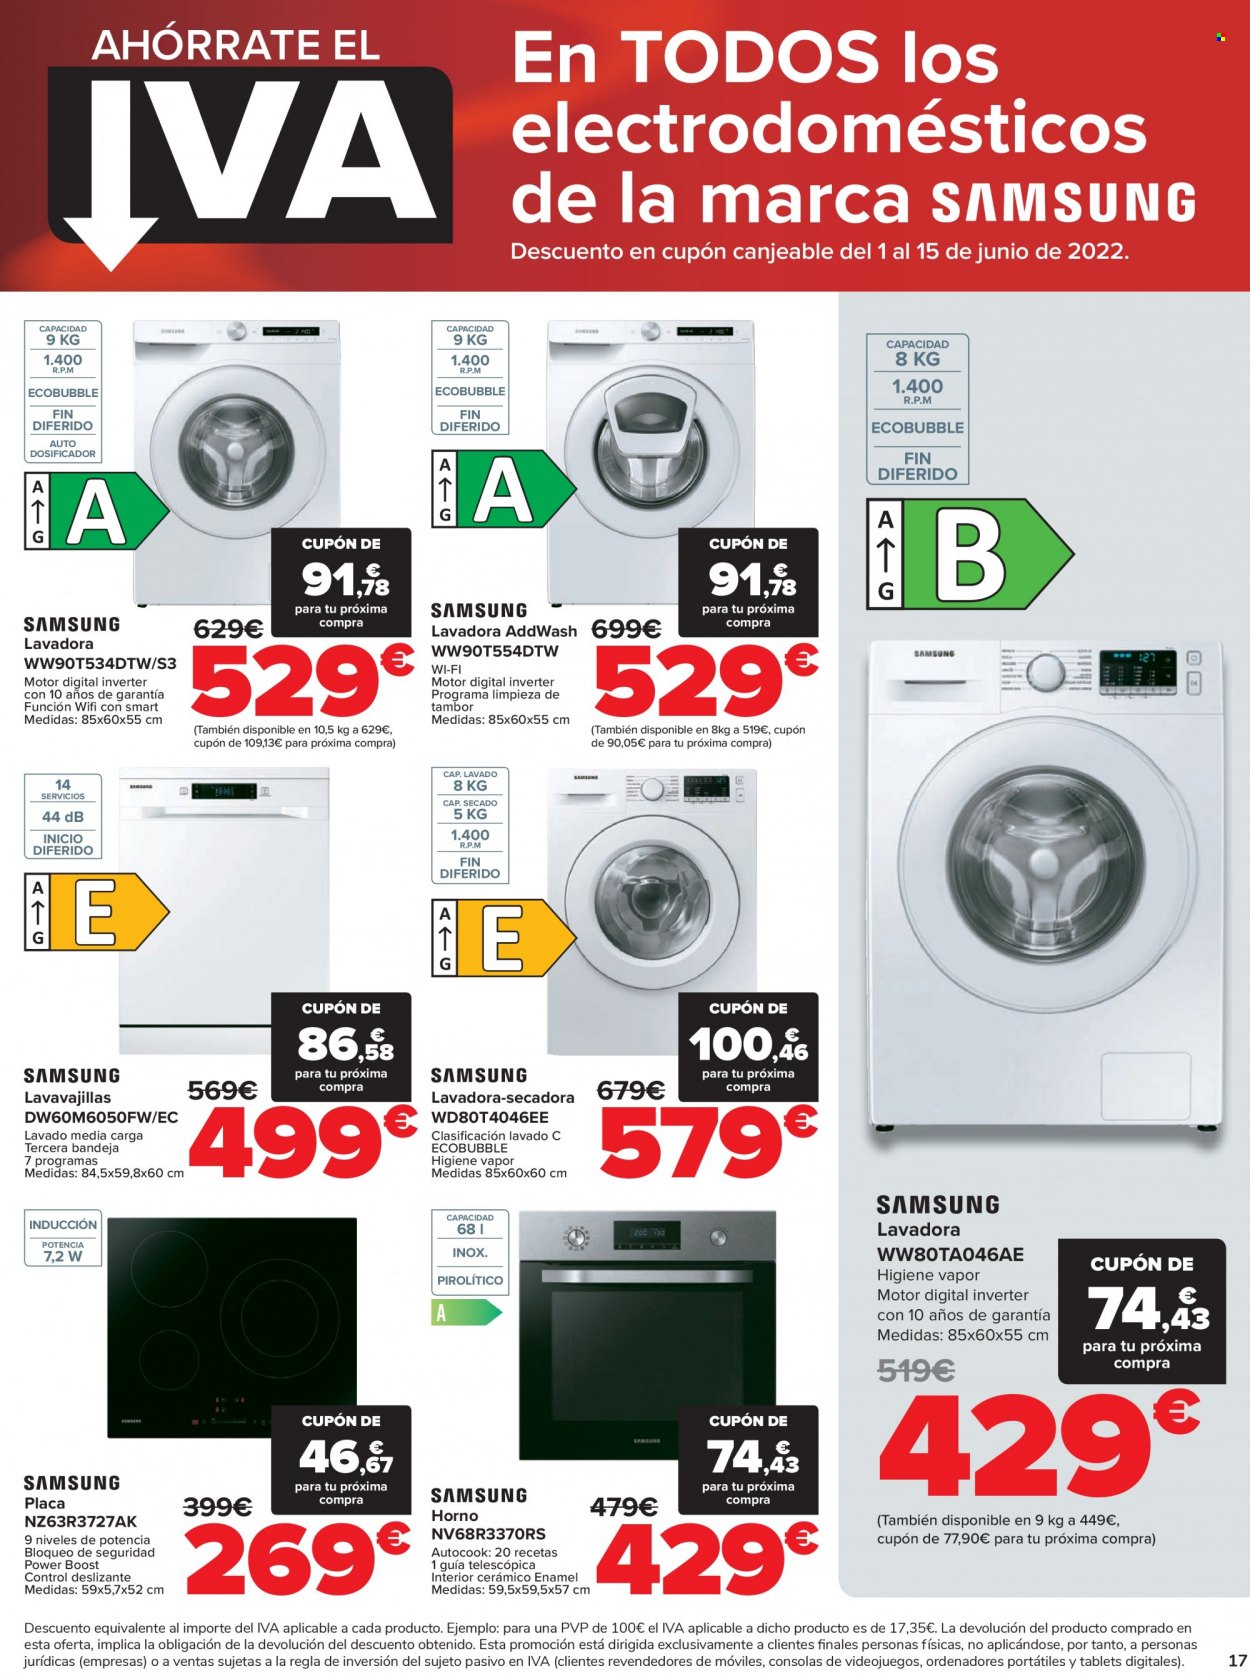 thumbnail - Folleto actual Carrefour - 25/05/22 - 31/05/22 - Ventas - lavavajillas, tablet, Samsung, cónsola, lavadora, secadora. Página 17.